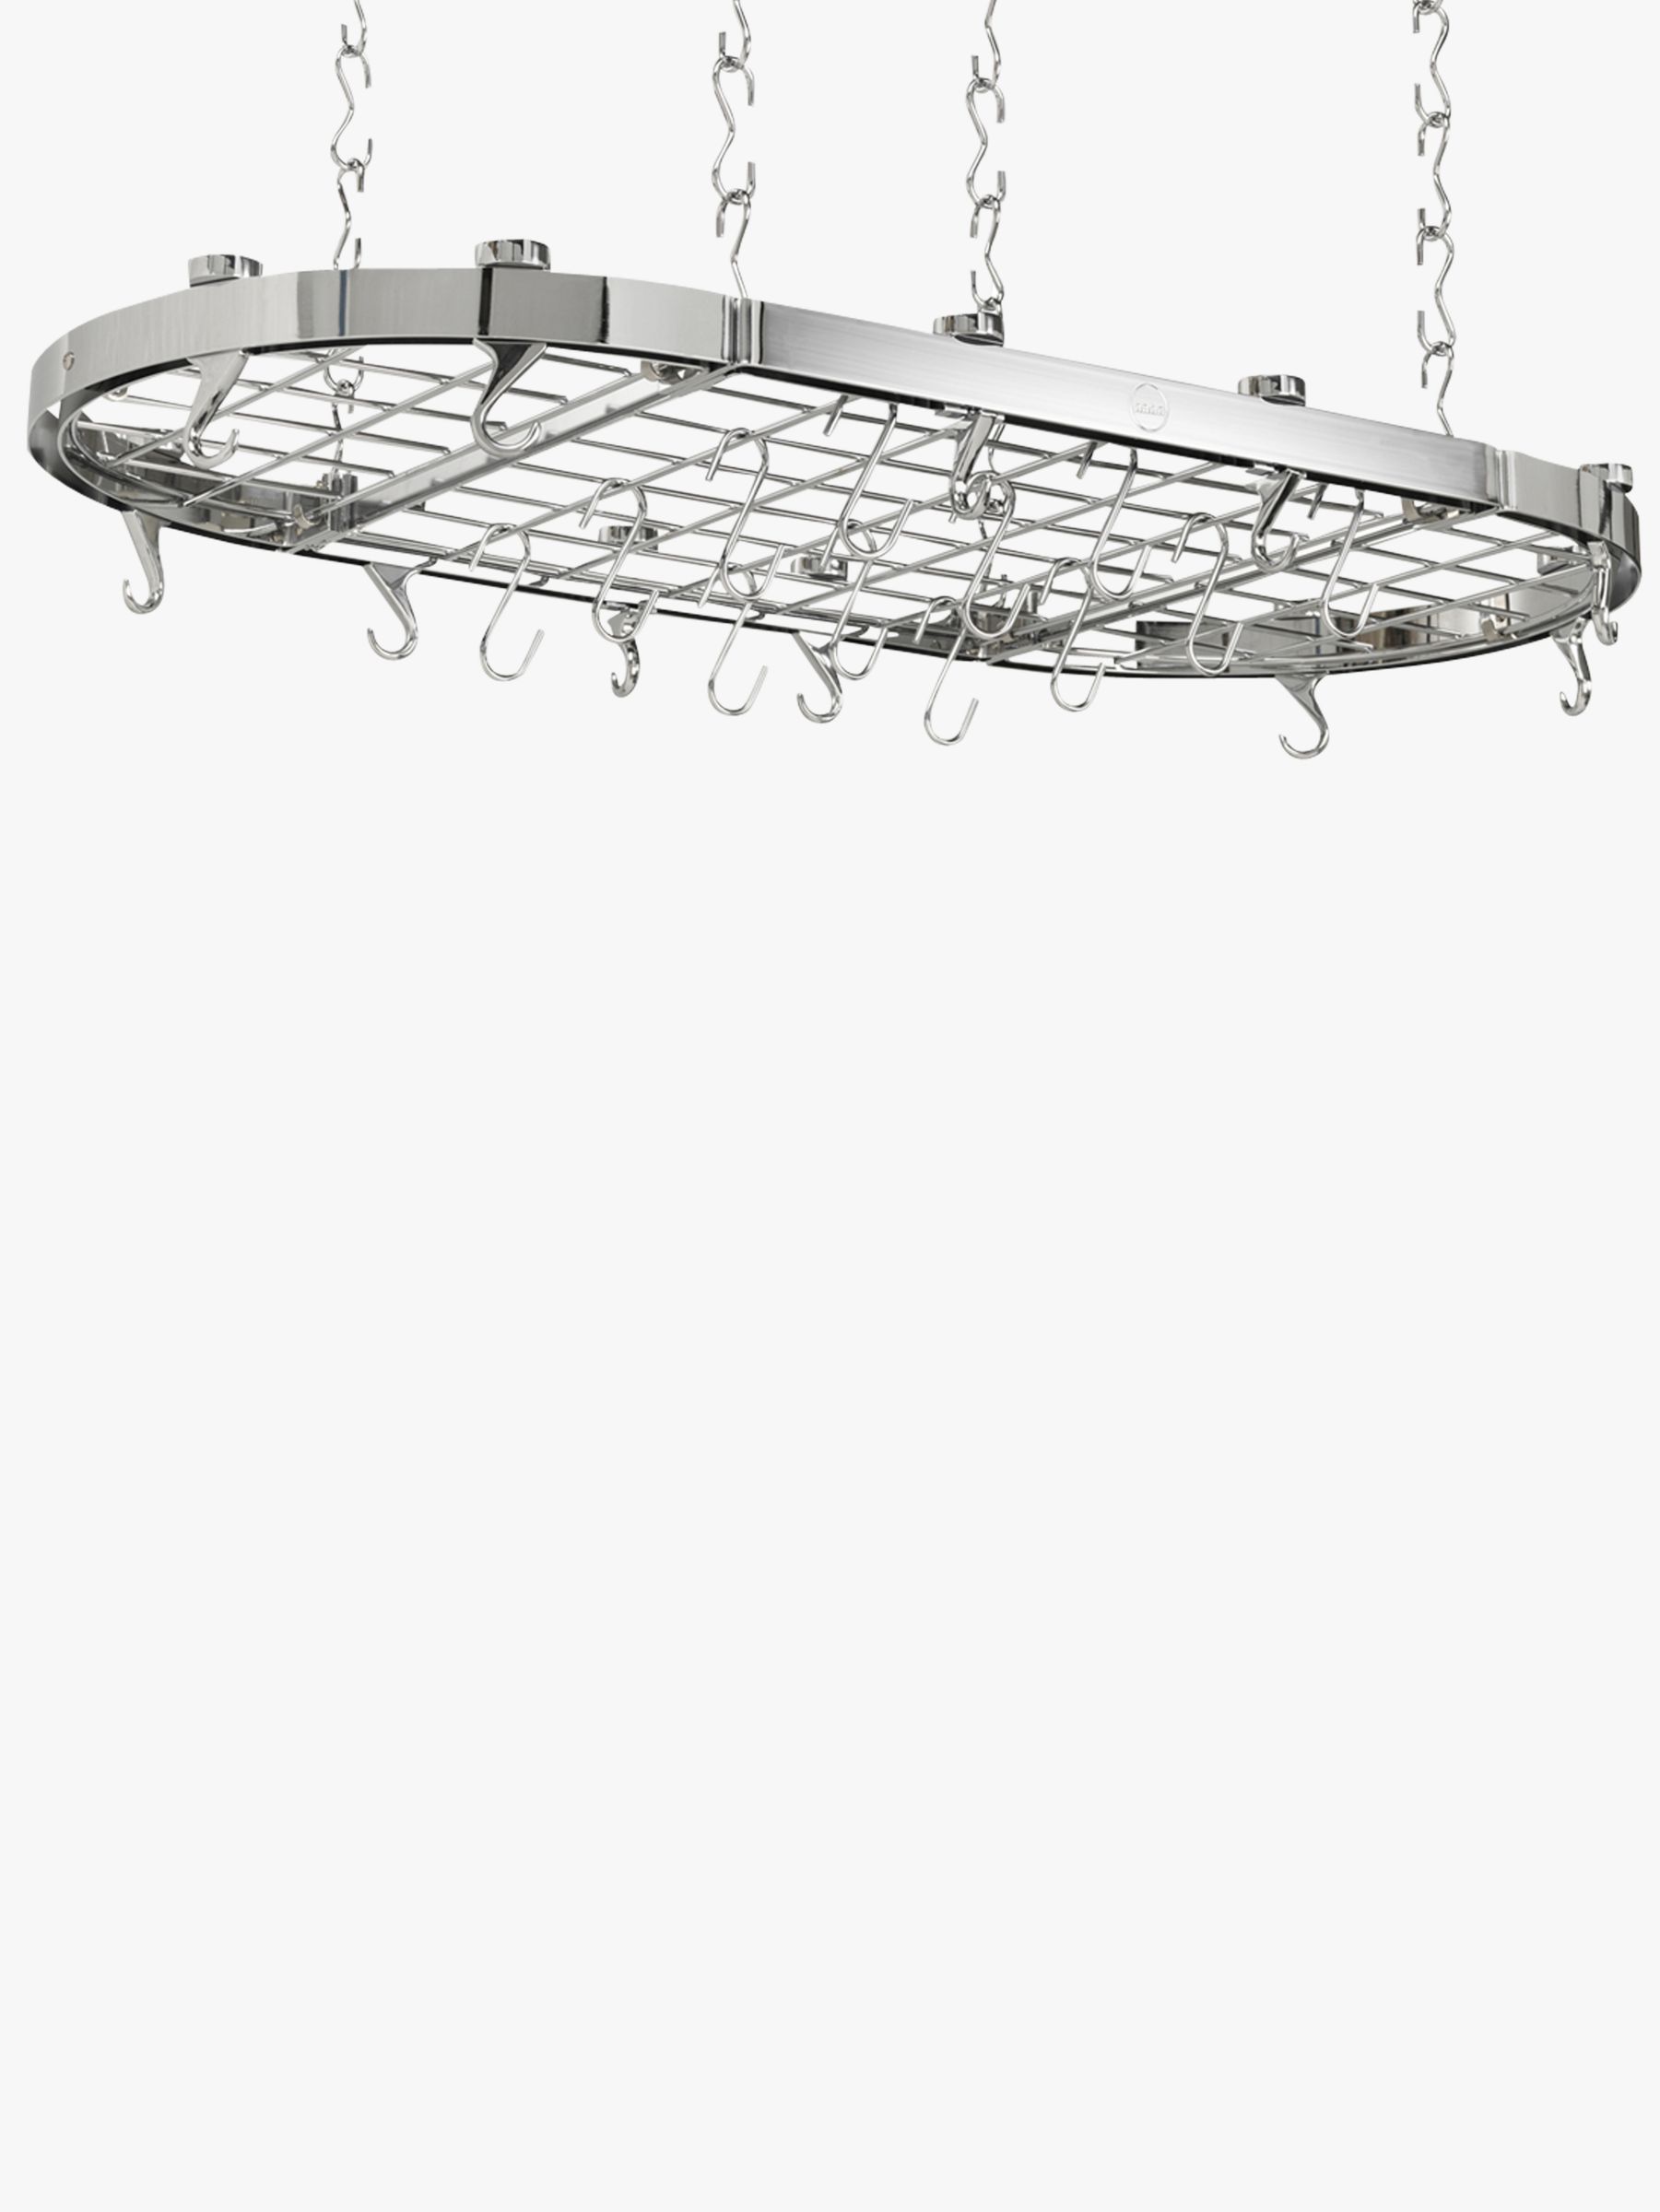 Hahn Premium Chrome Oval Ceiling Pan Rack